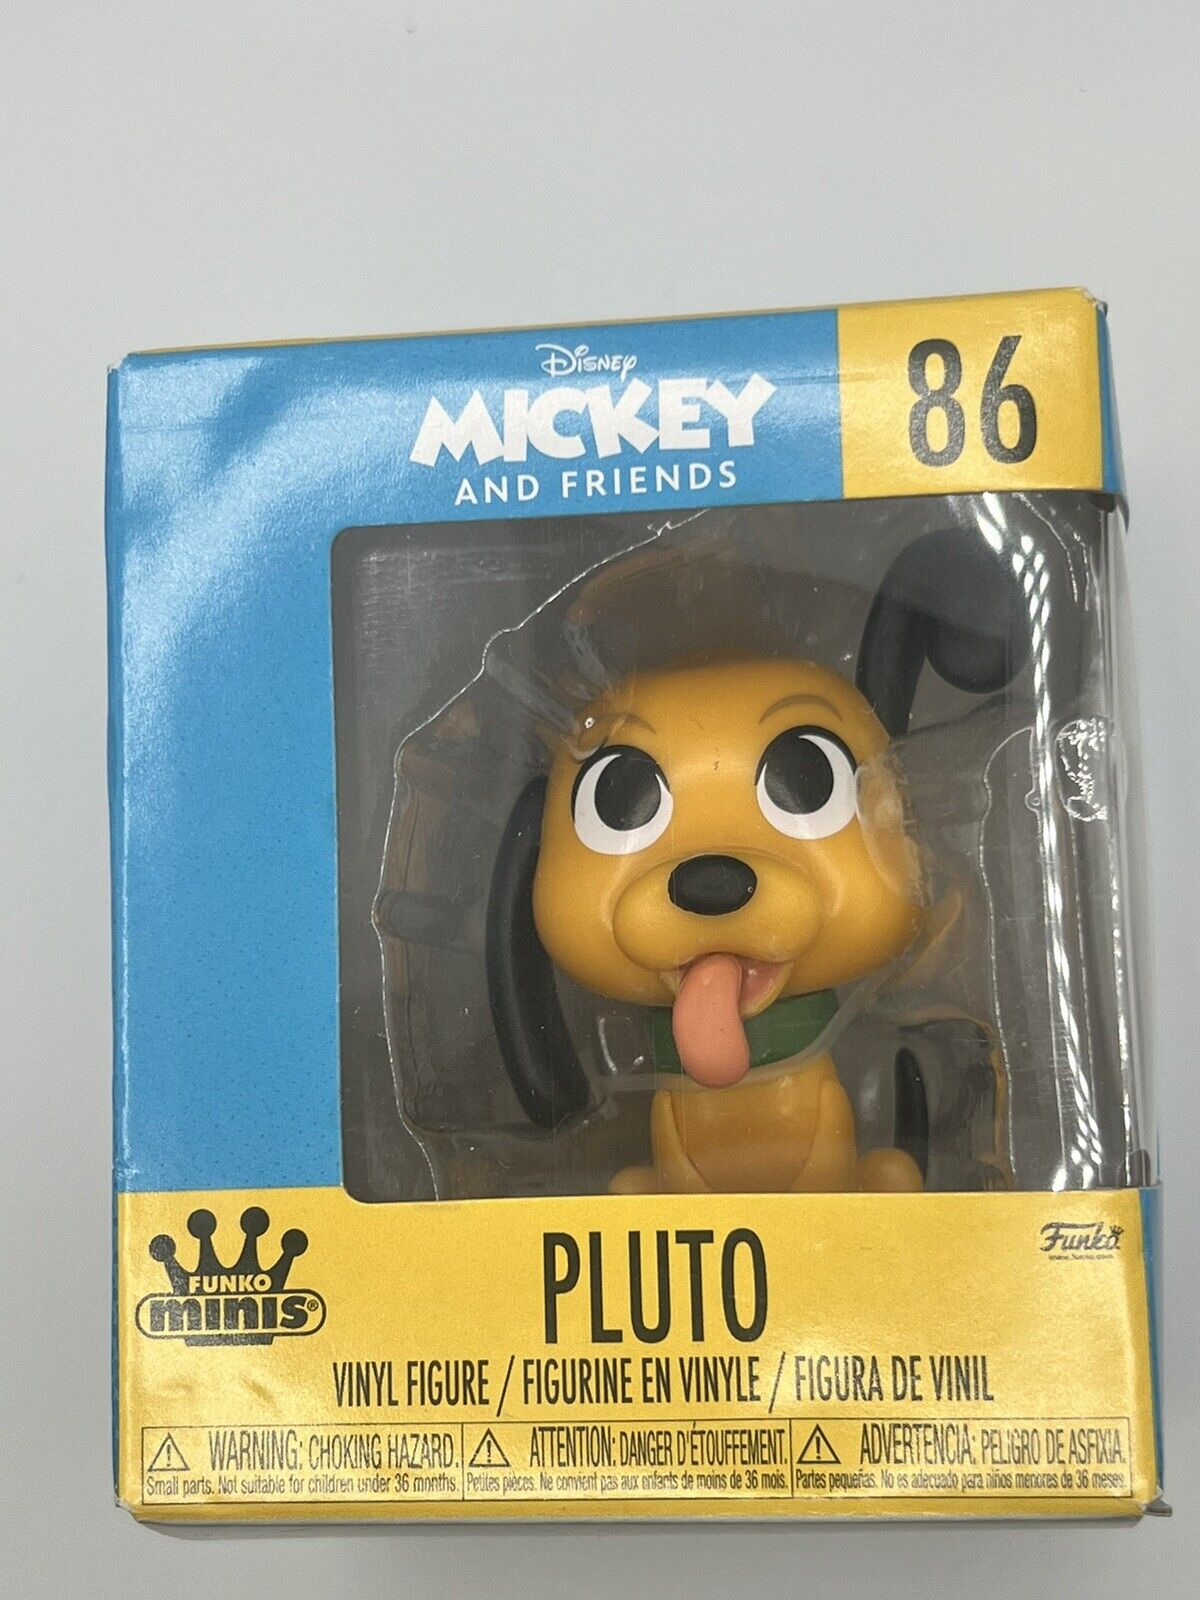 Funko Mini: Disney - Pluto #86 New In Box See Pictures For Condition